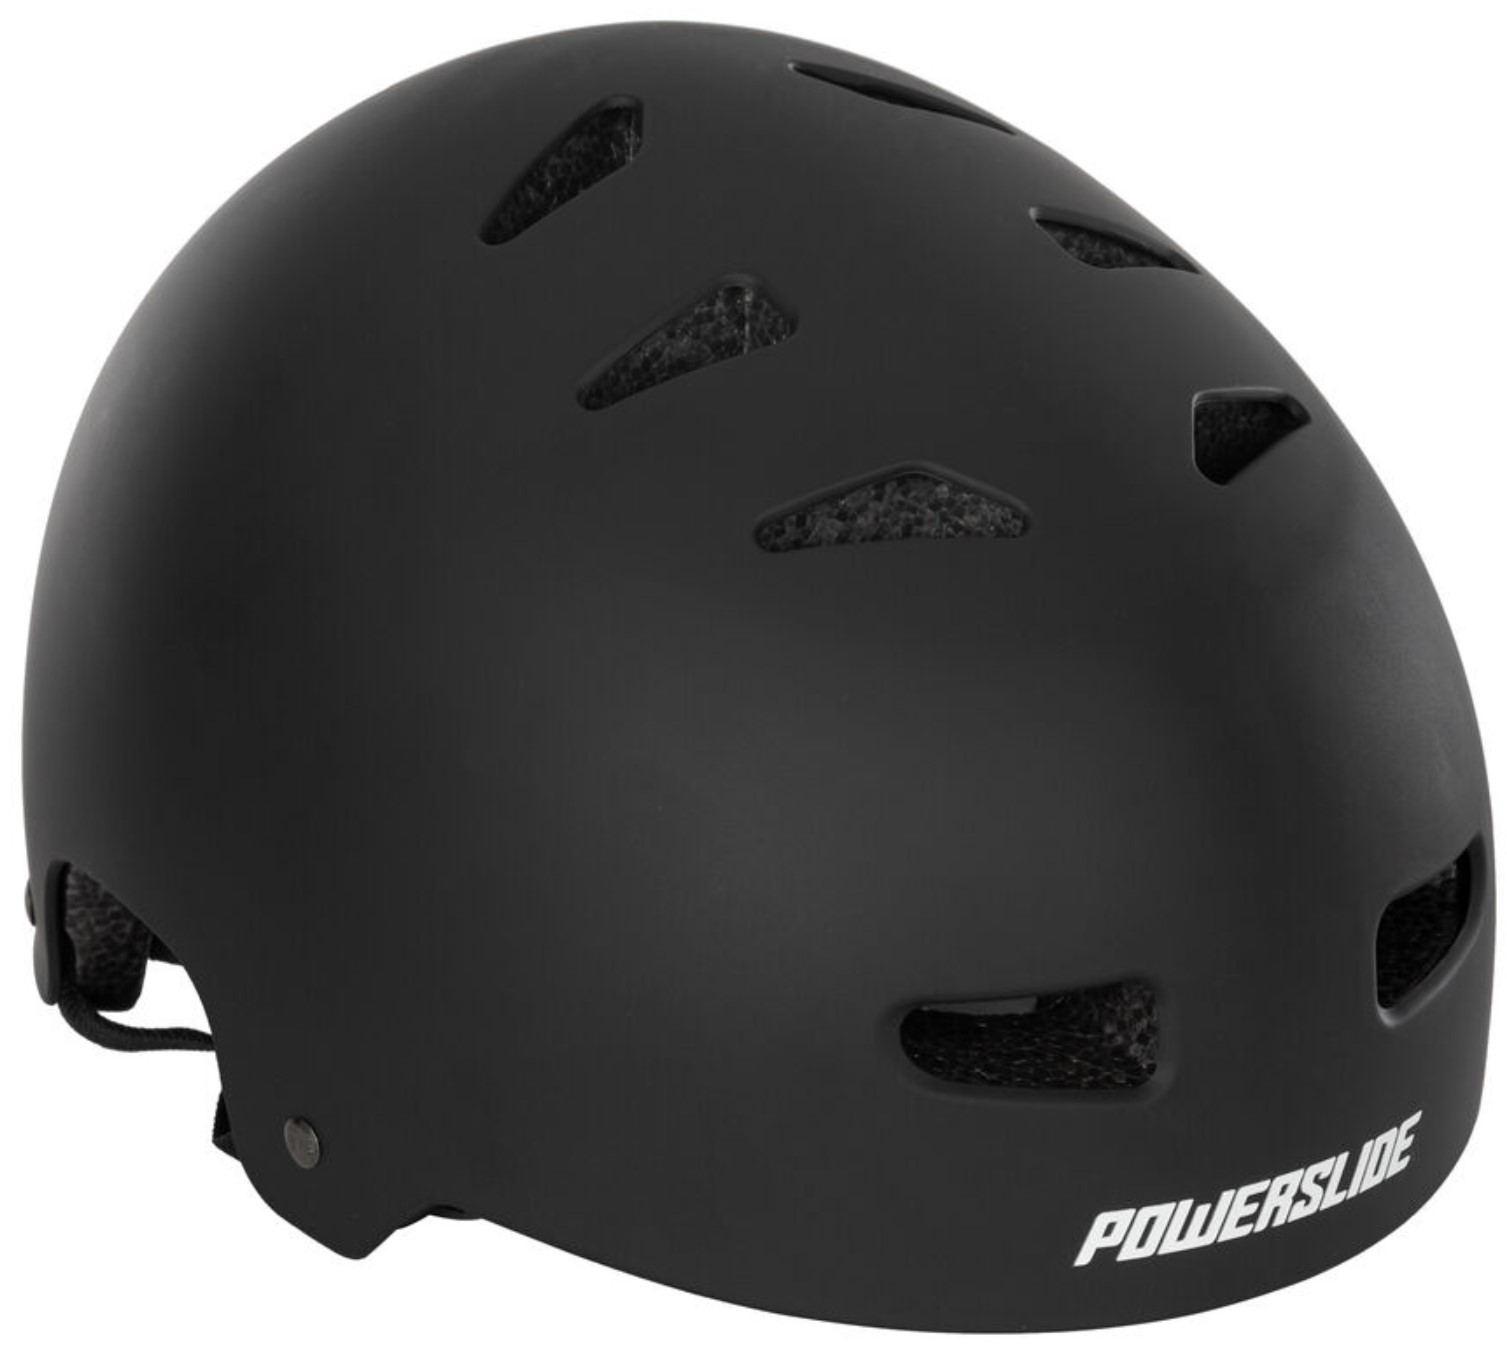 Powerslide Allround Helmet Black with boa system